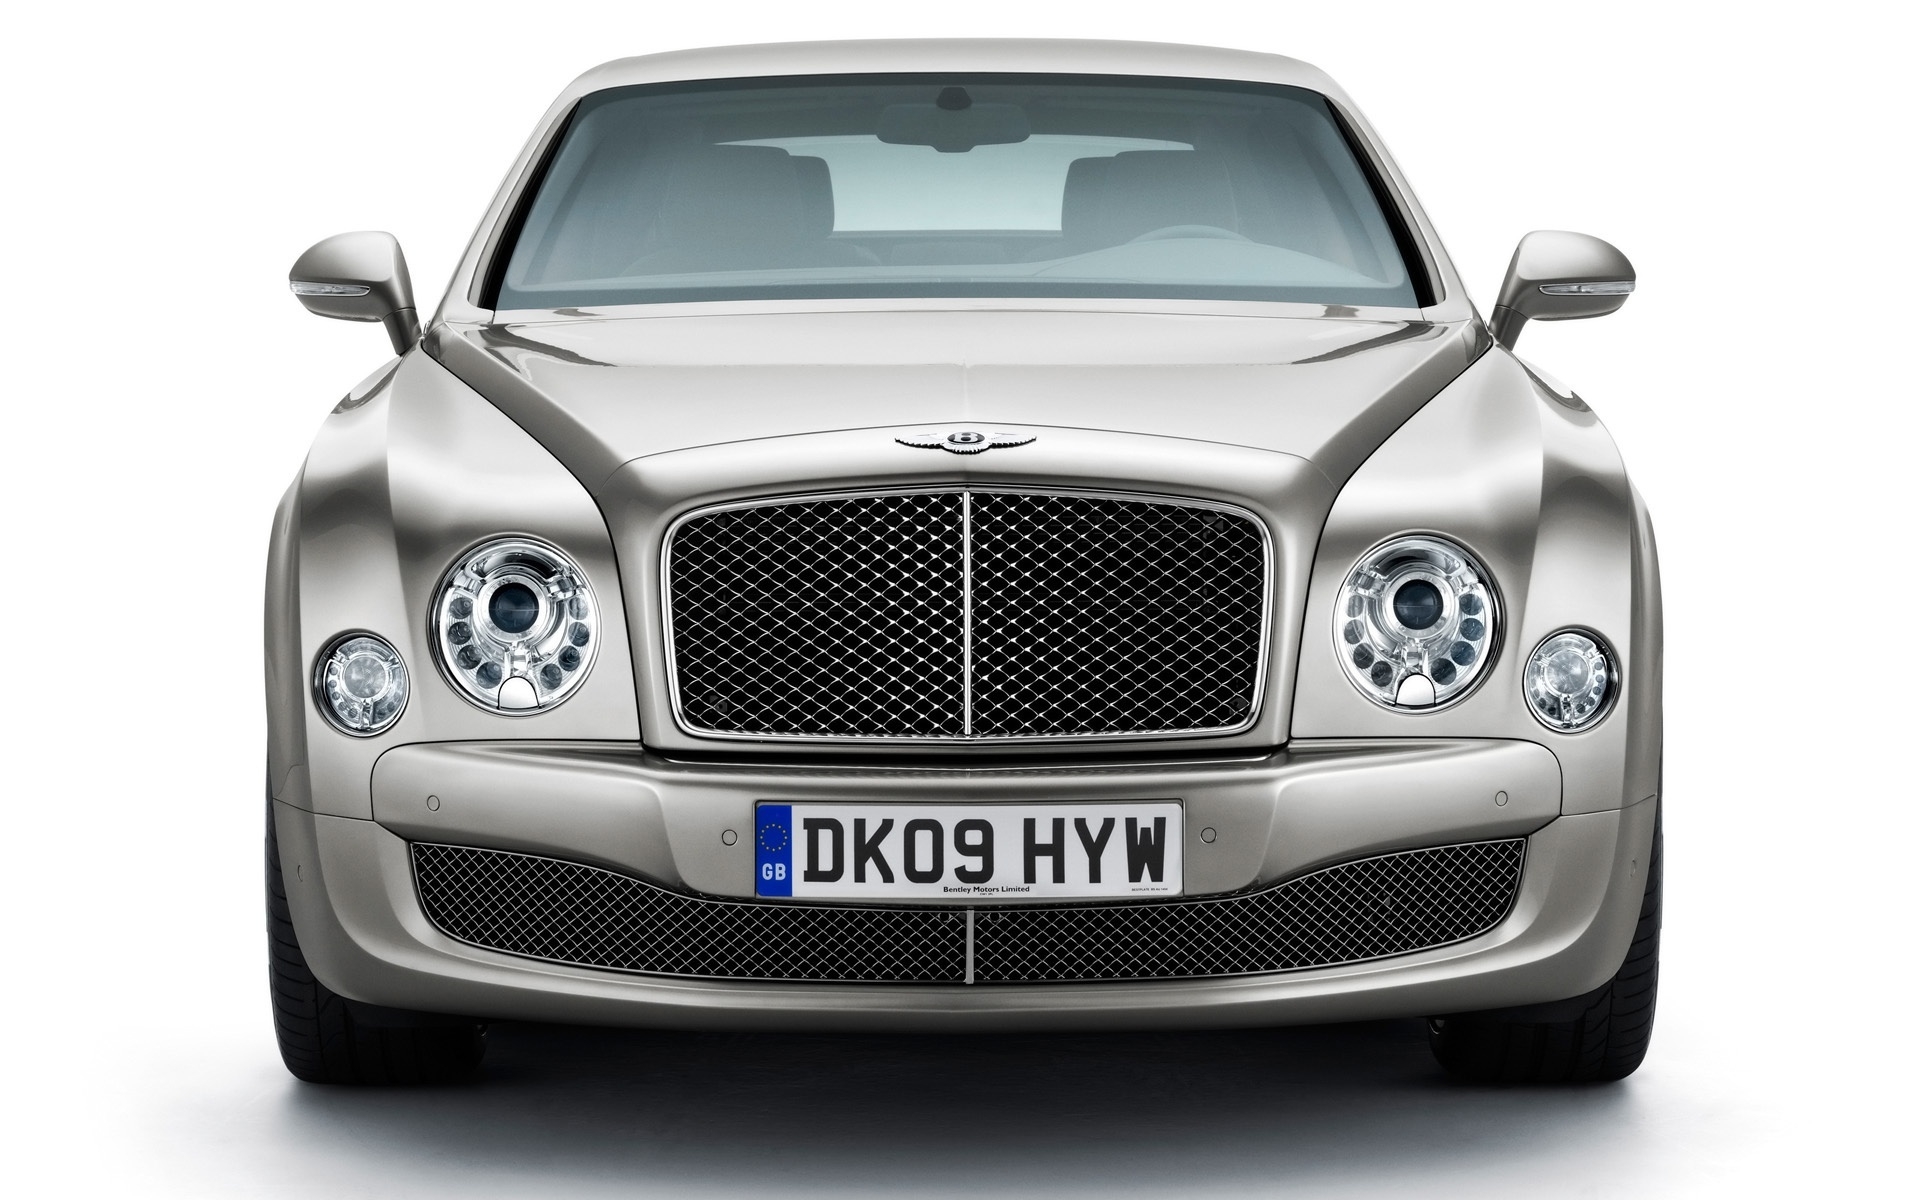 2010 Bentley Mulsanne Front for 1920 x 1200 widescreen resolution